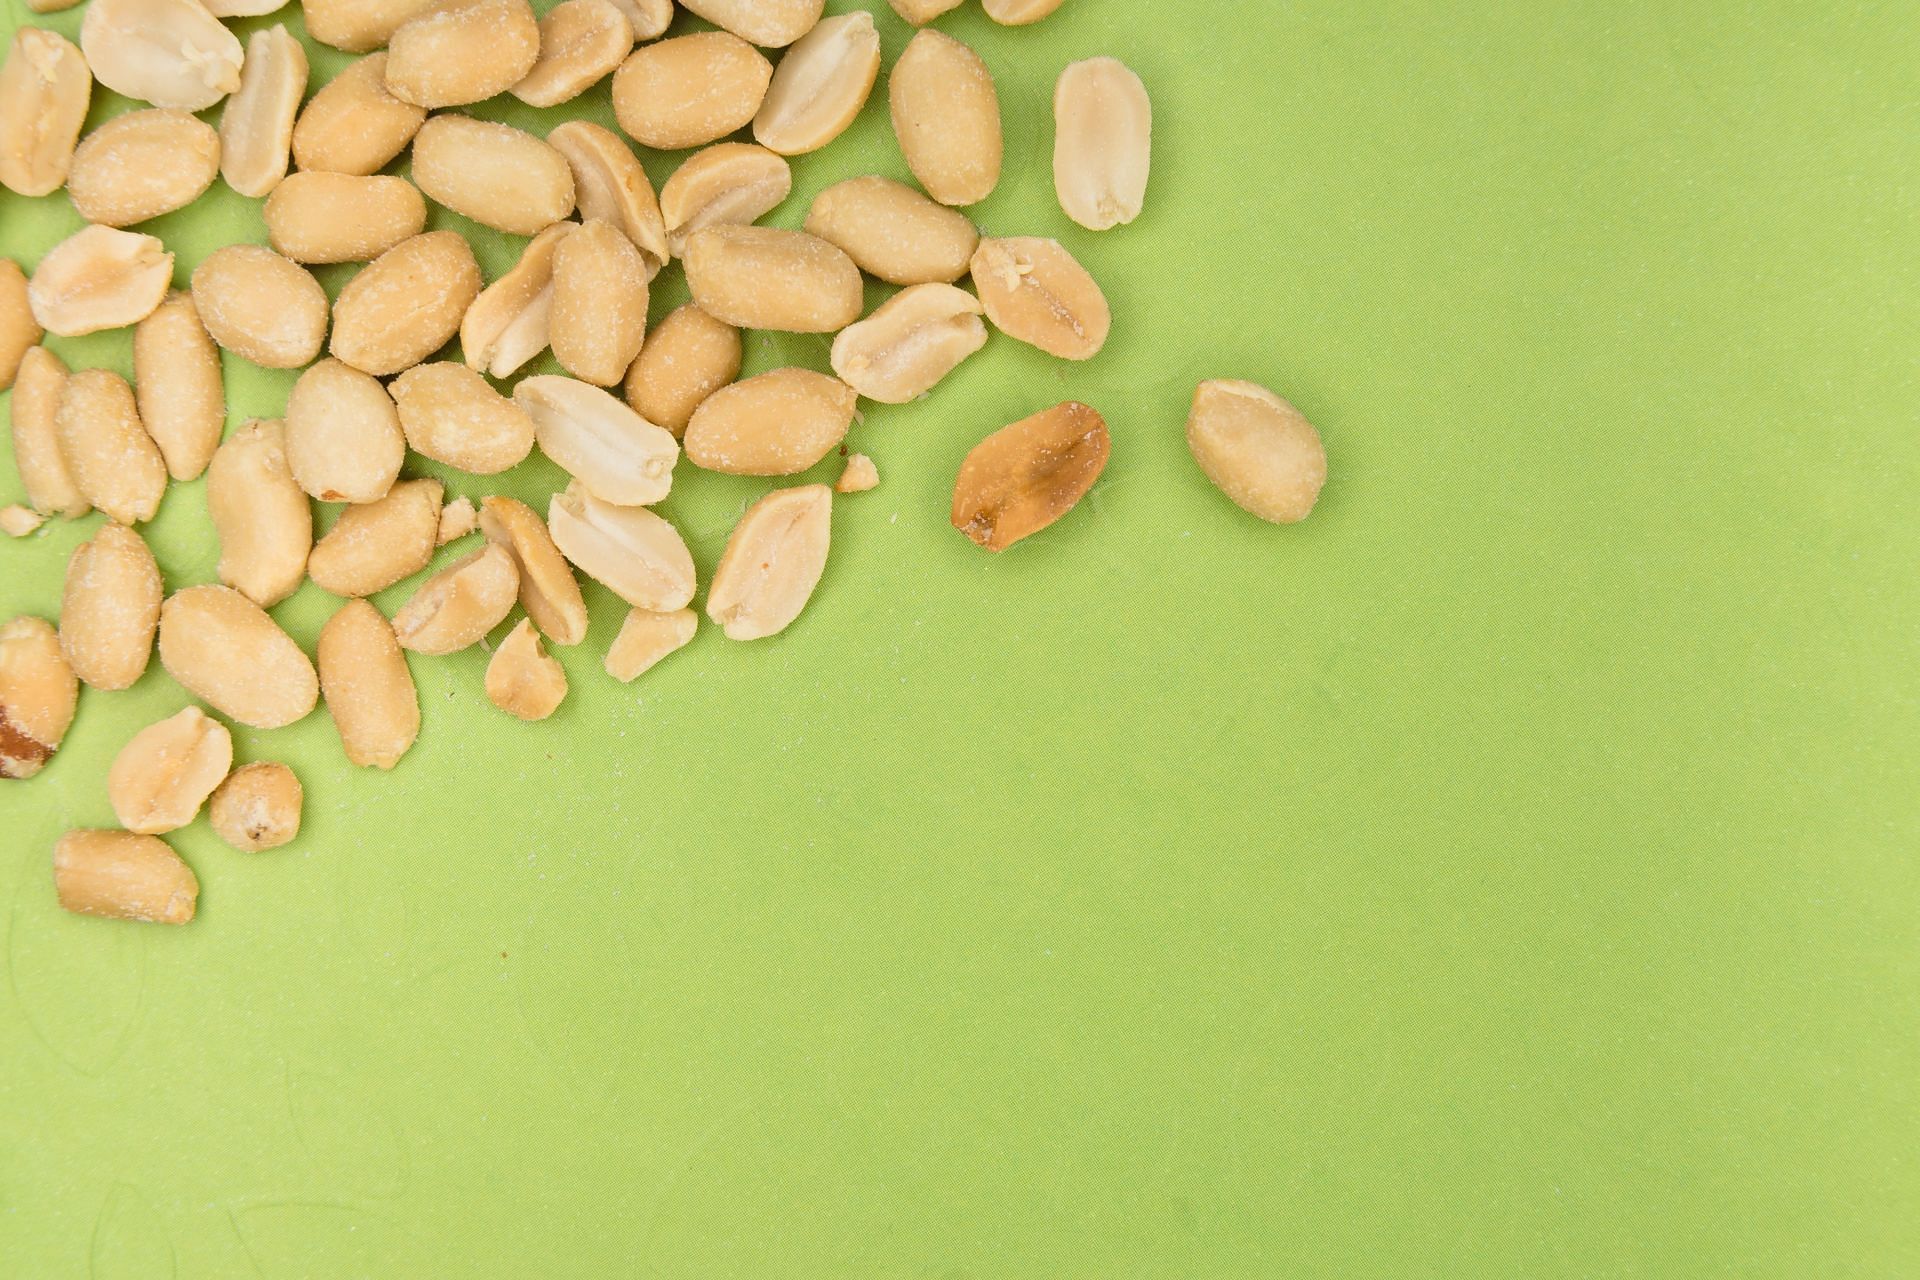 Peanuts may reduce cravings. (Image via Unsplash/ Markus Winkler)